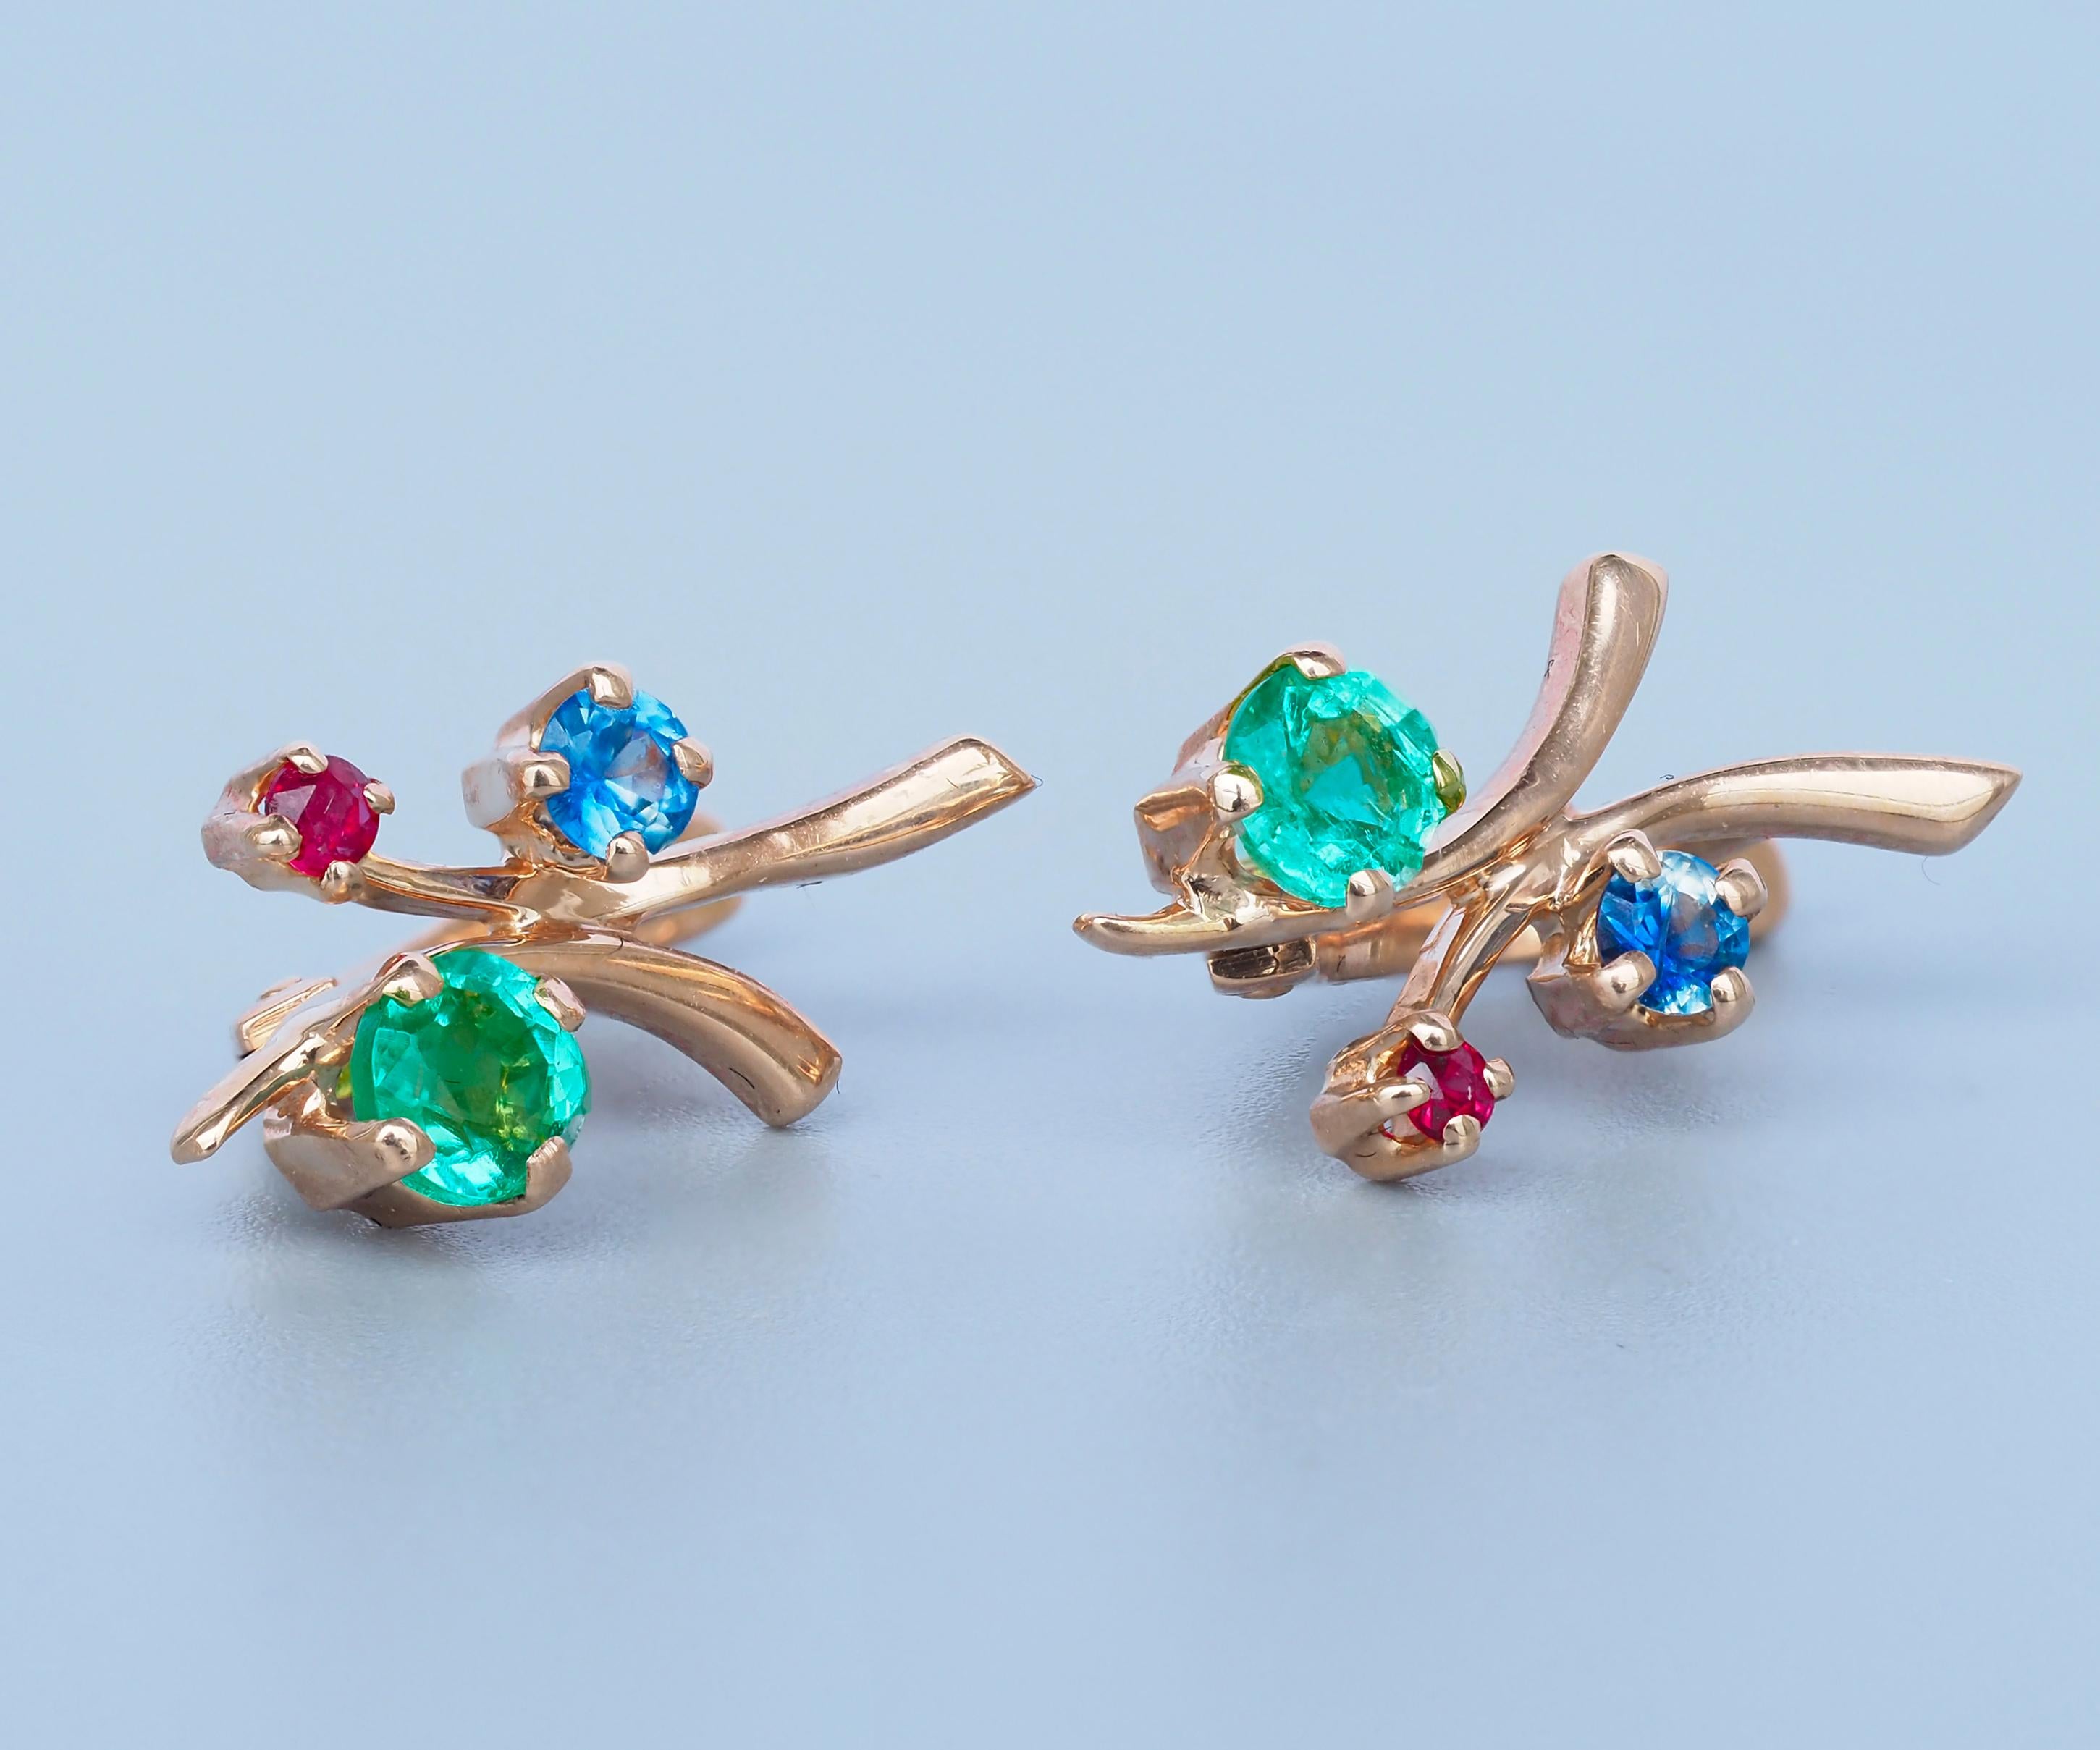 tiny emerald earrings